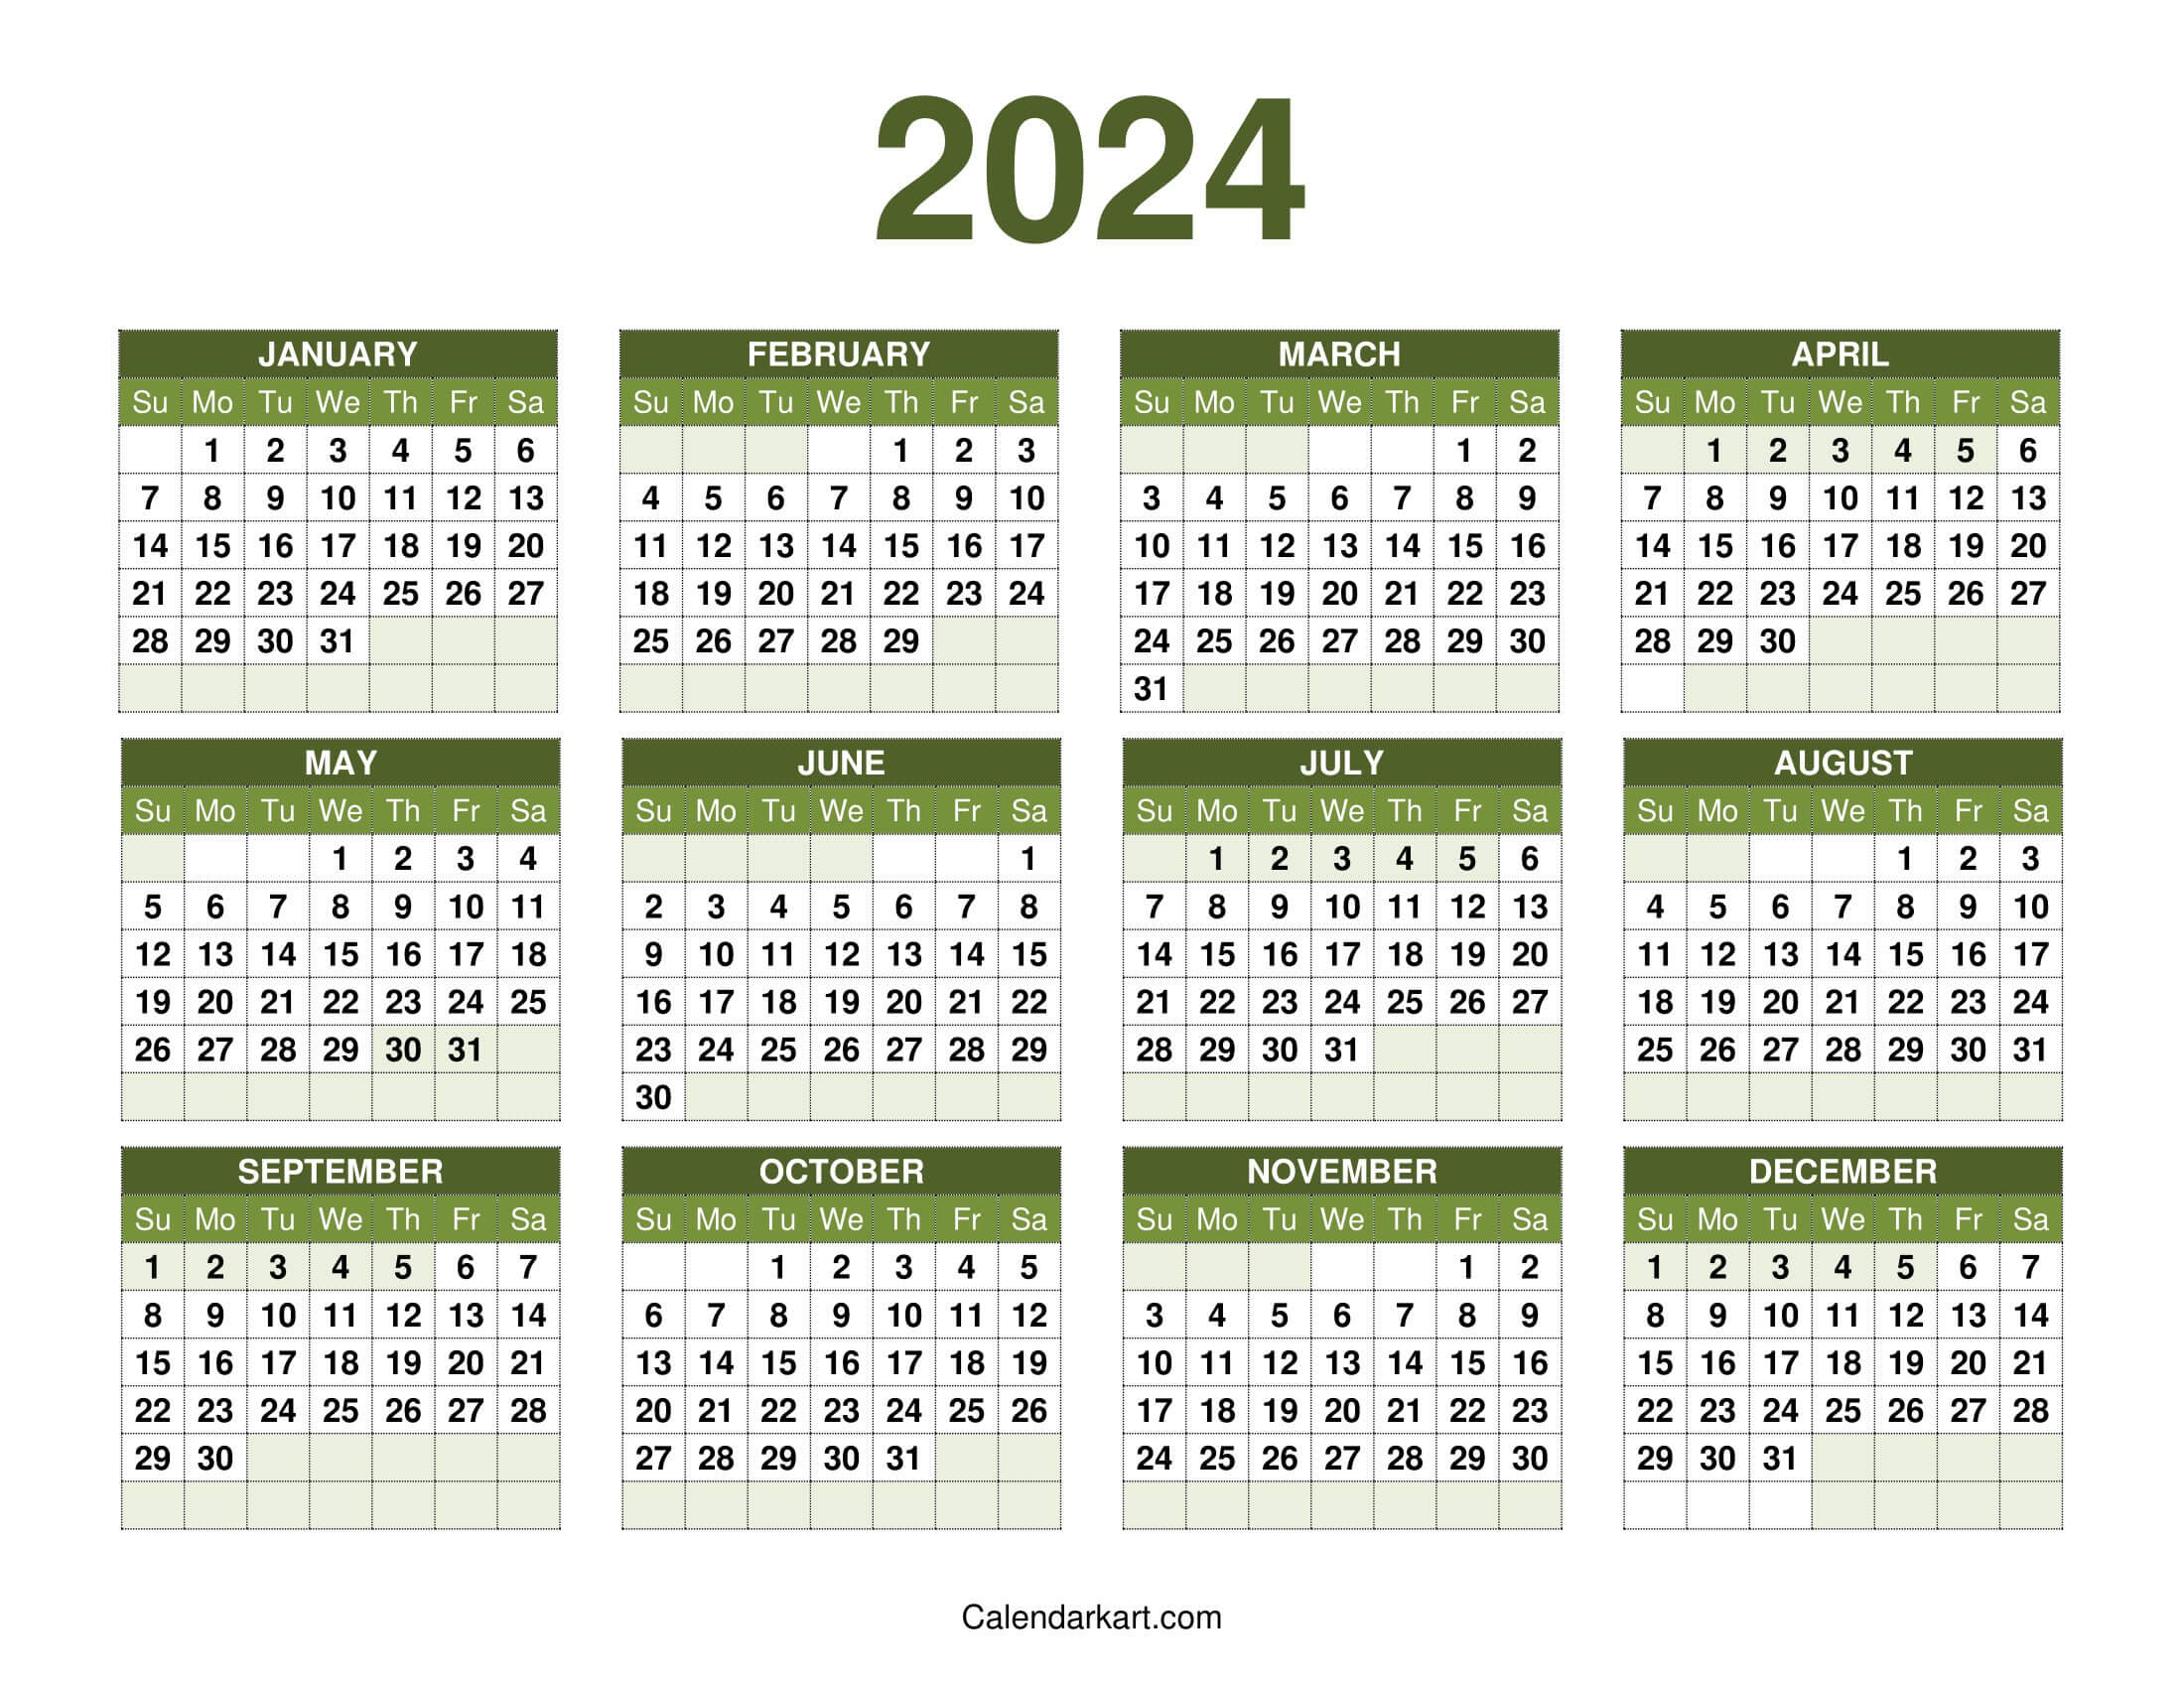 Free Printable Year At A Glance Calendar 2023-2024 - Calendarkart | Yearly Calendar For 2024